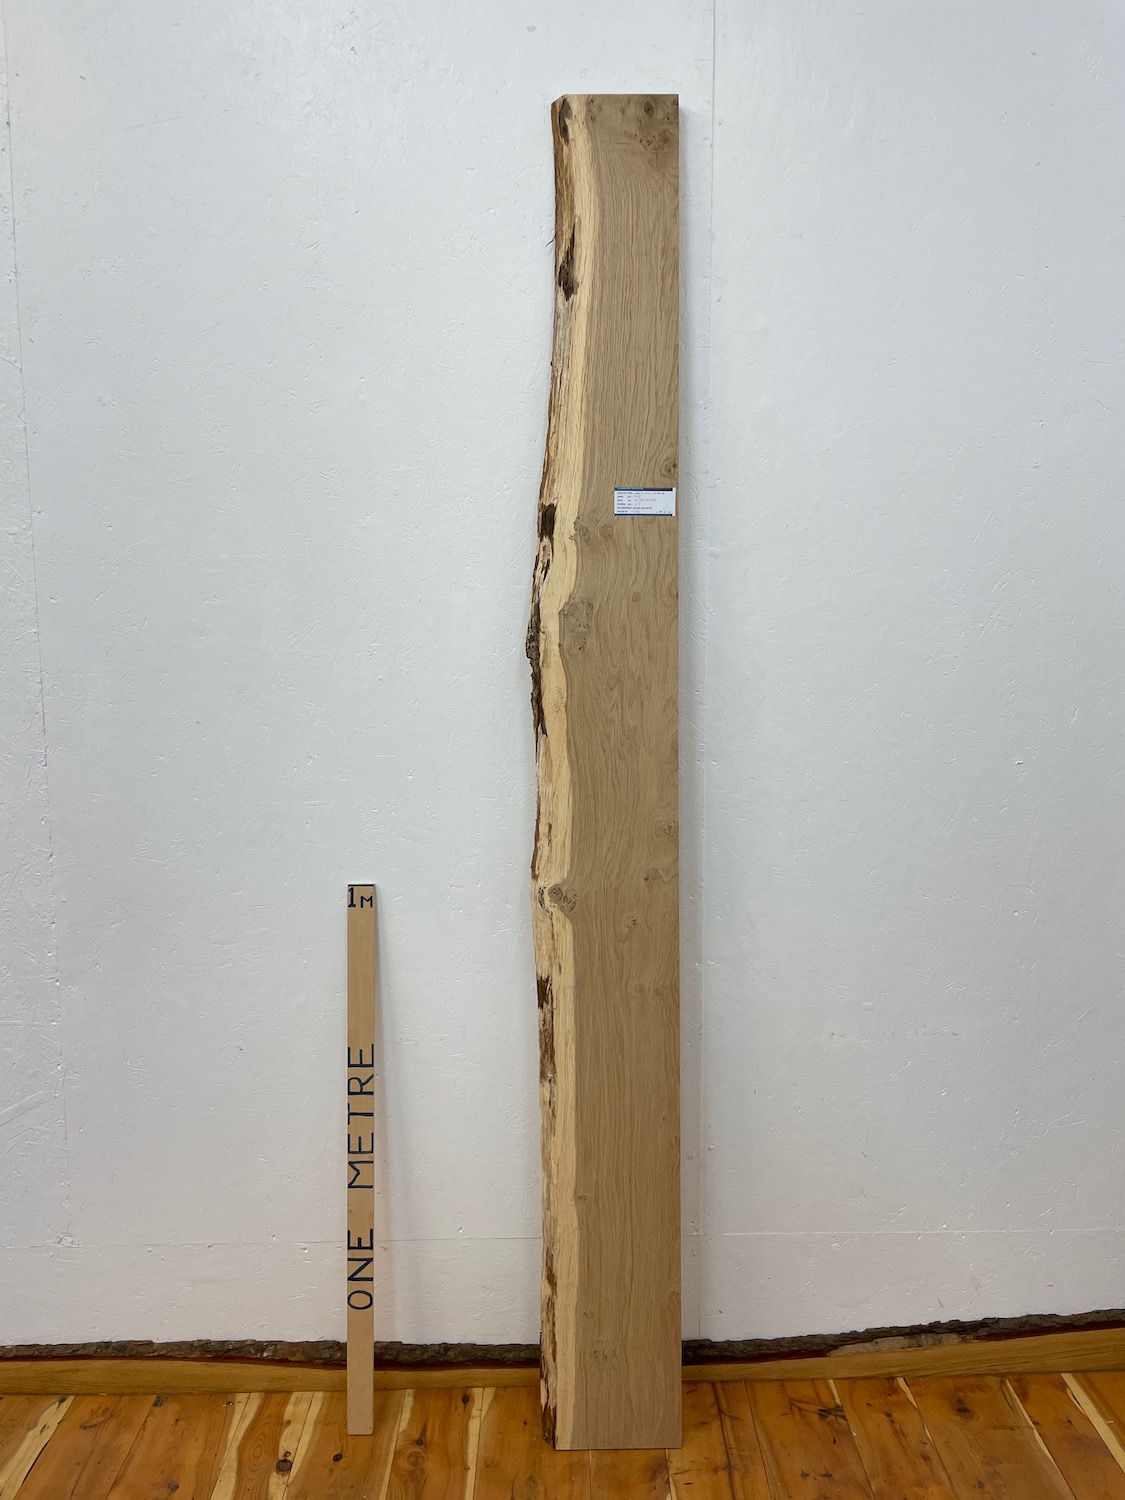 OAK Single Waney Natural Edge Board 1564A-14 Thickness 3.5cm Kiln Dried Planed & Thicknessed Seasoned Hardwood Live Edge Shelf